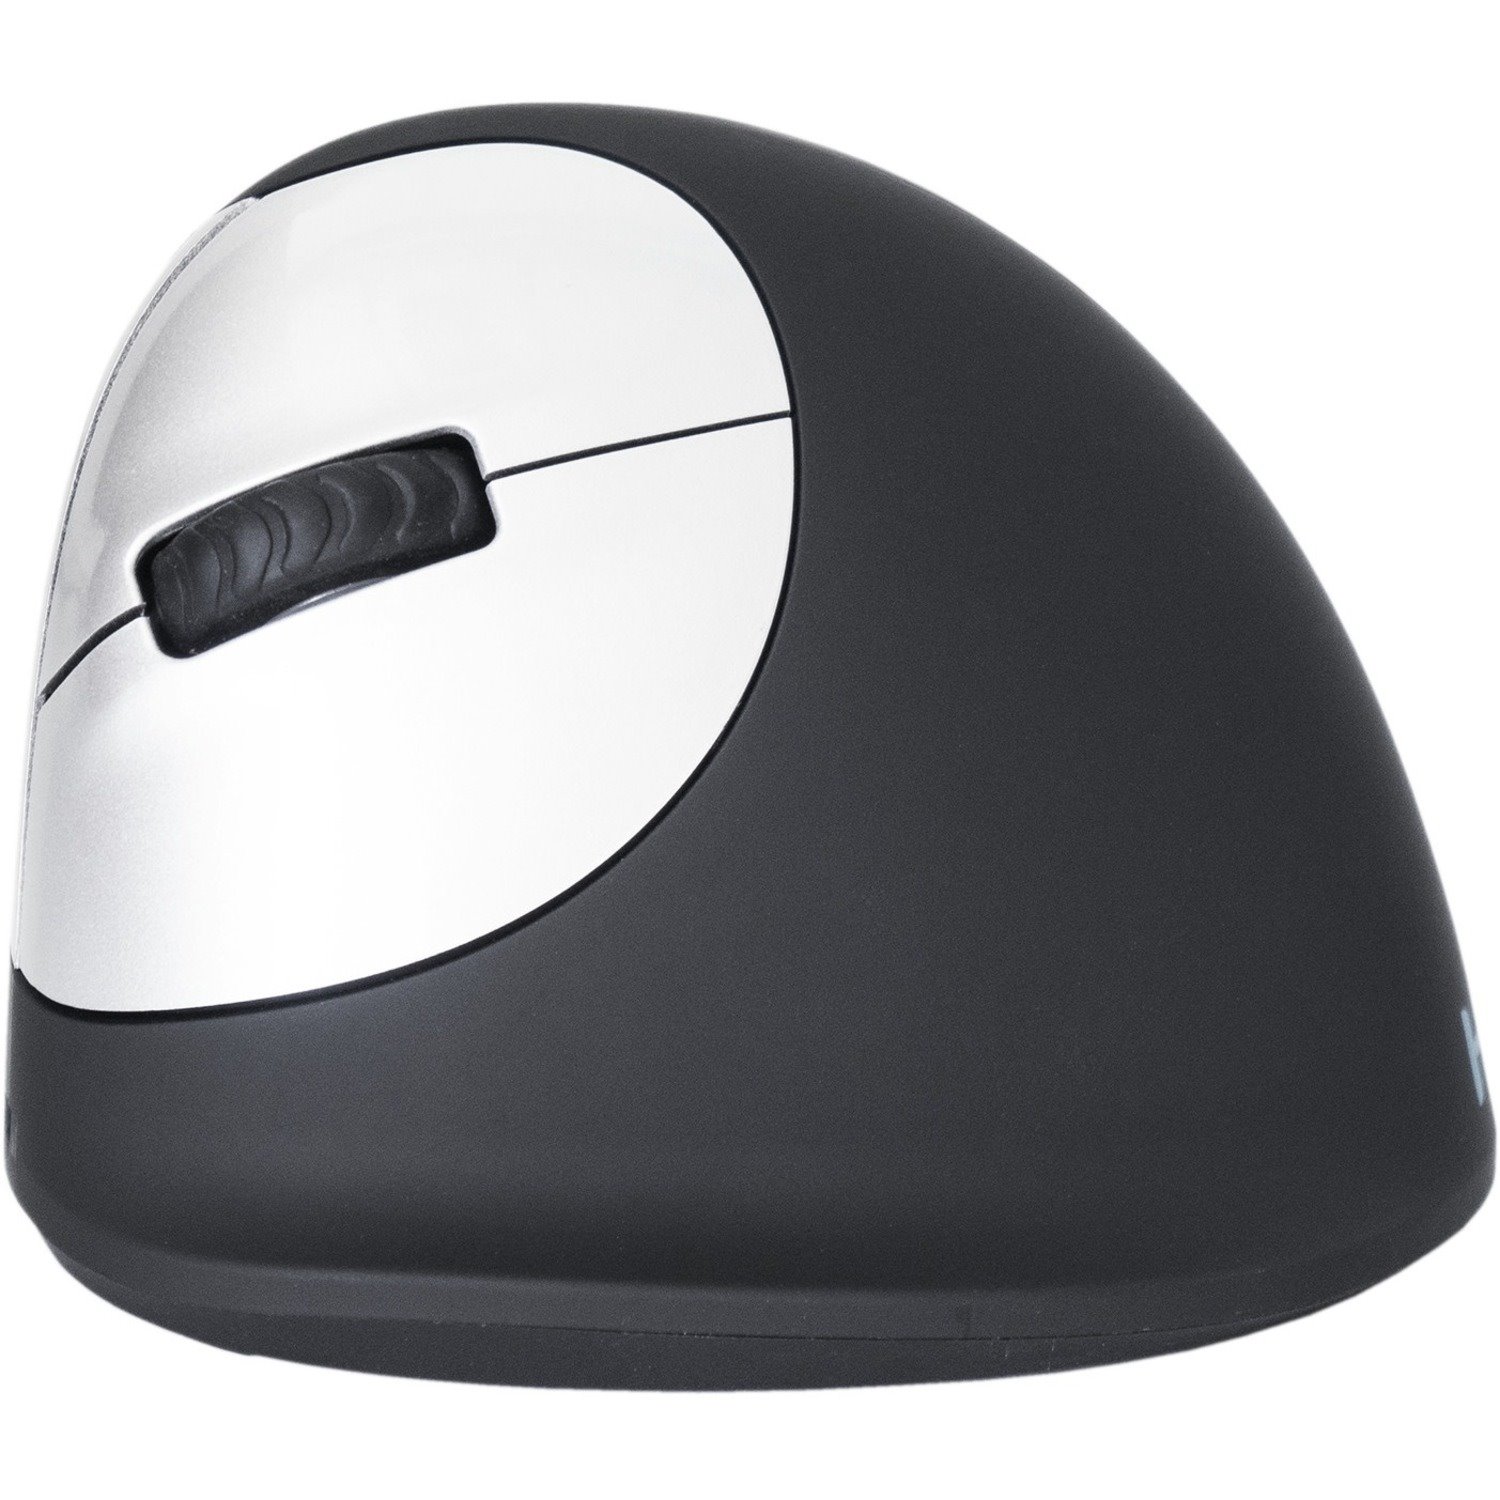 R-Go HE Mouse, Ergonomic Mouse, Medium (165-195mm), Left Handed, Wireless